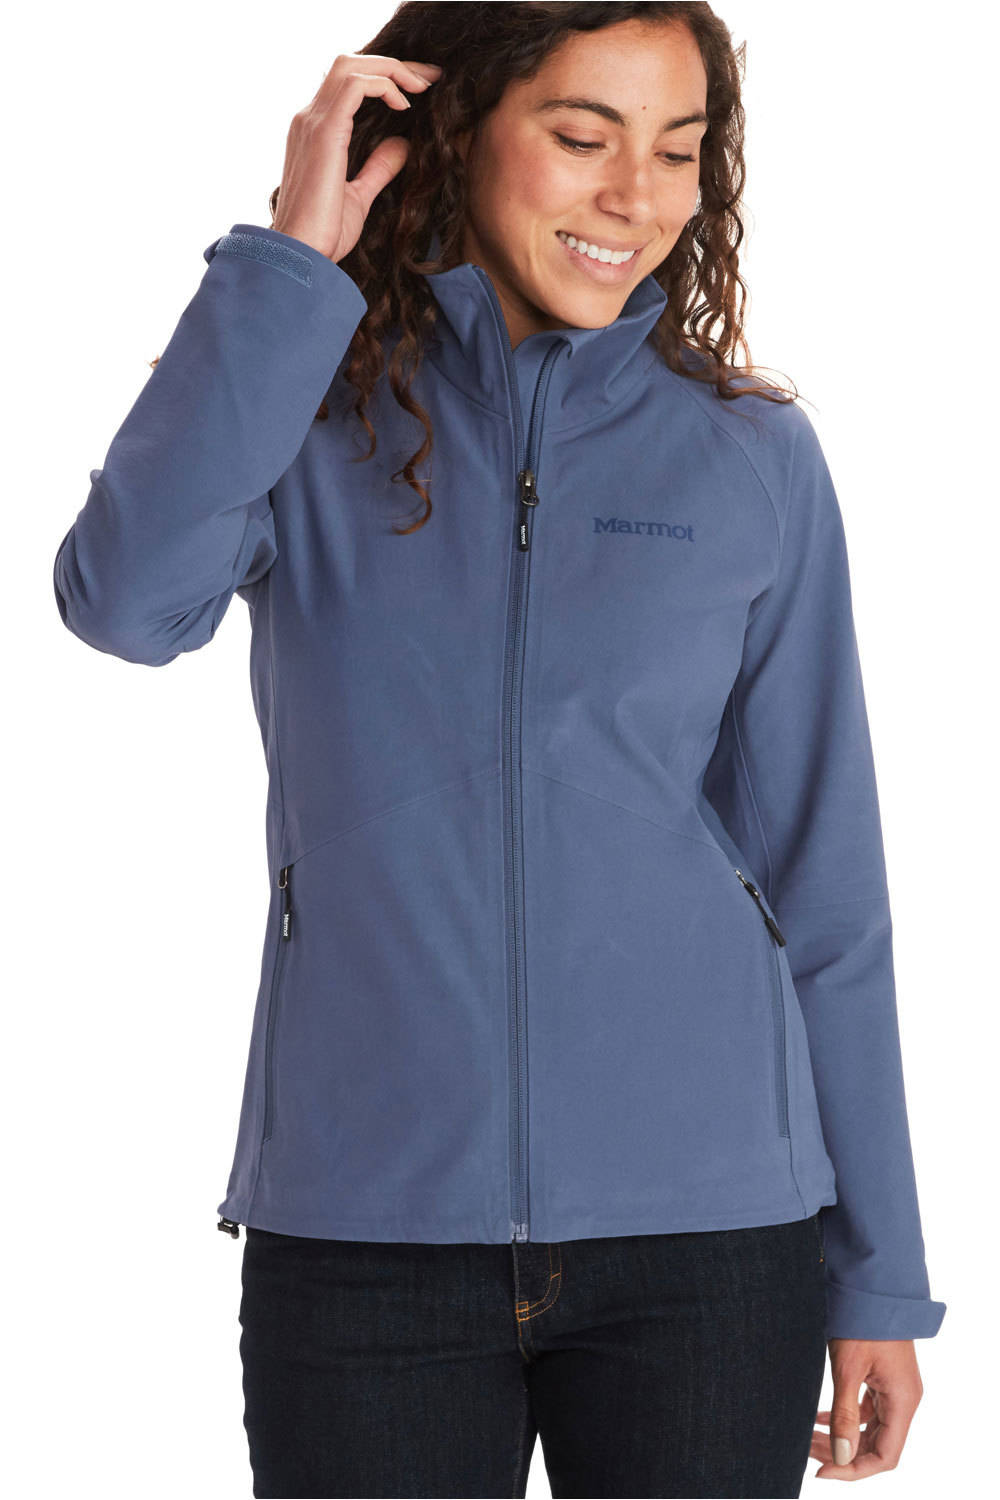 Marmot chaqueta impermeable mujer Wm's Alsek Jacket vista frontal